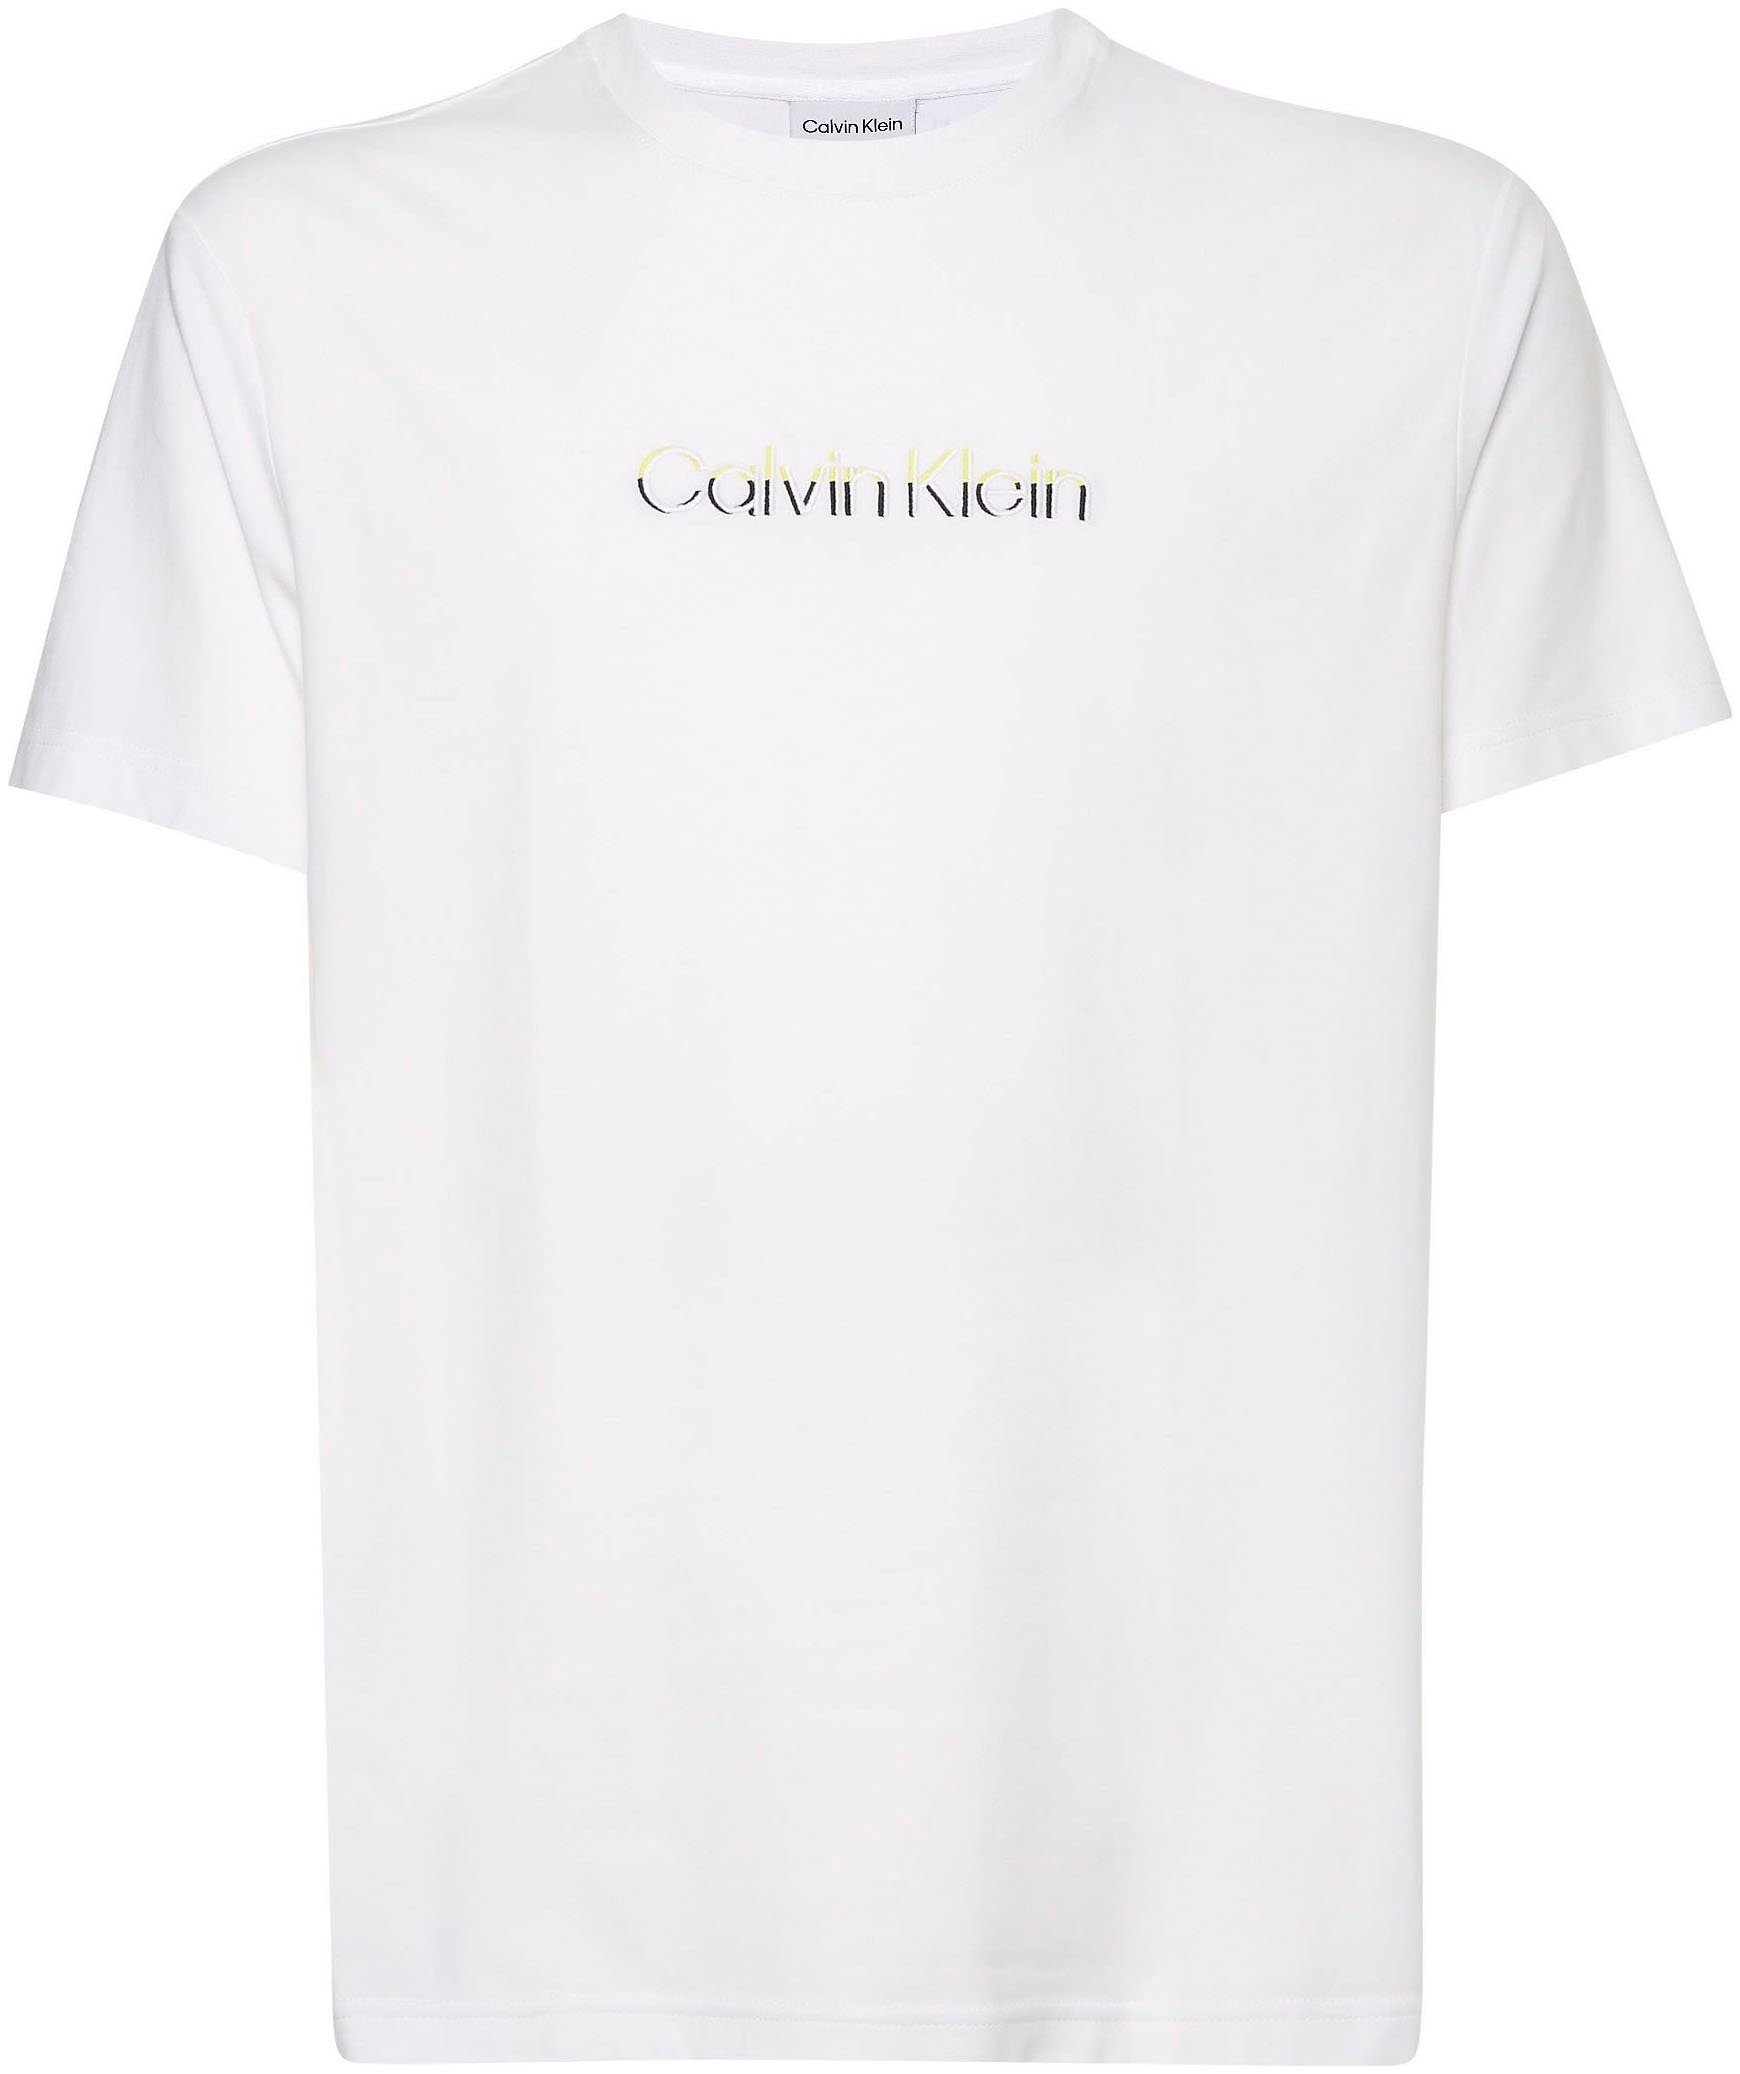 Klein LOGO T-Shirt Calvin bright MULTI COLOR white